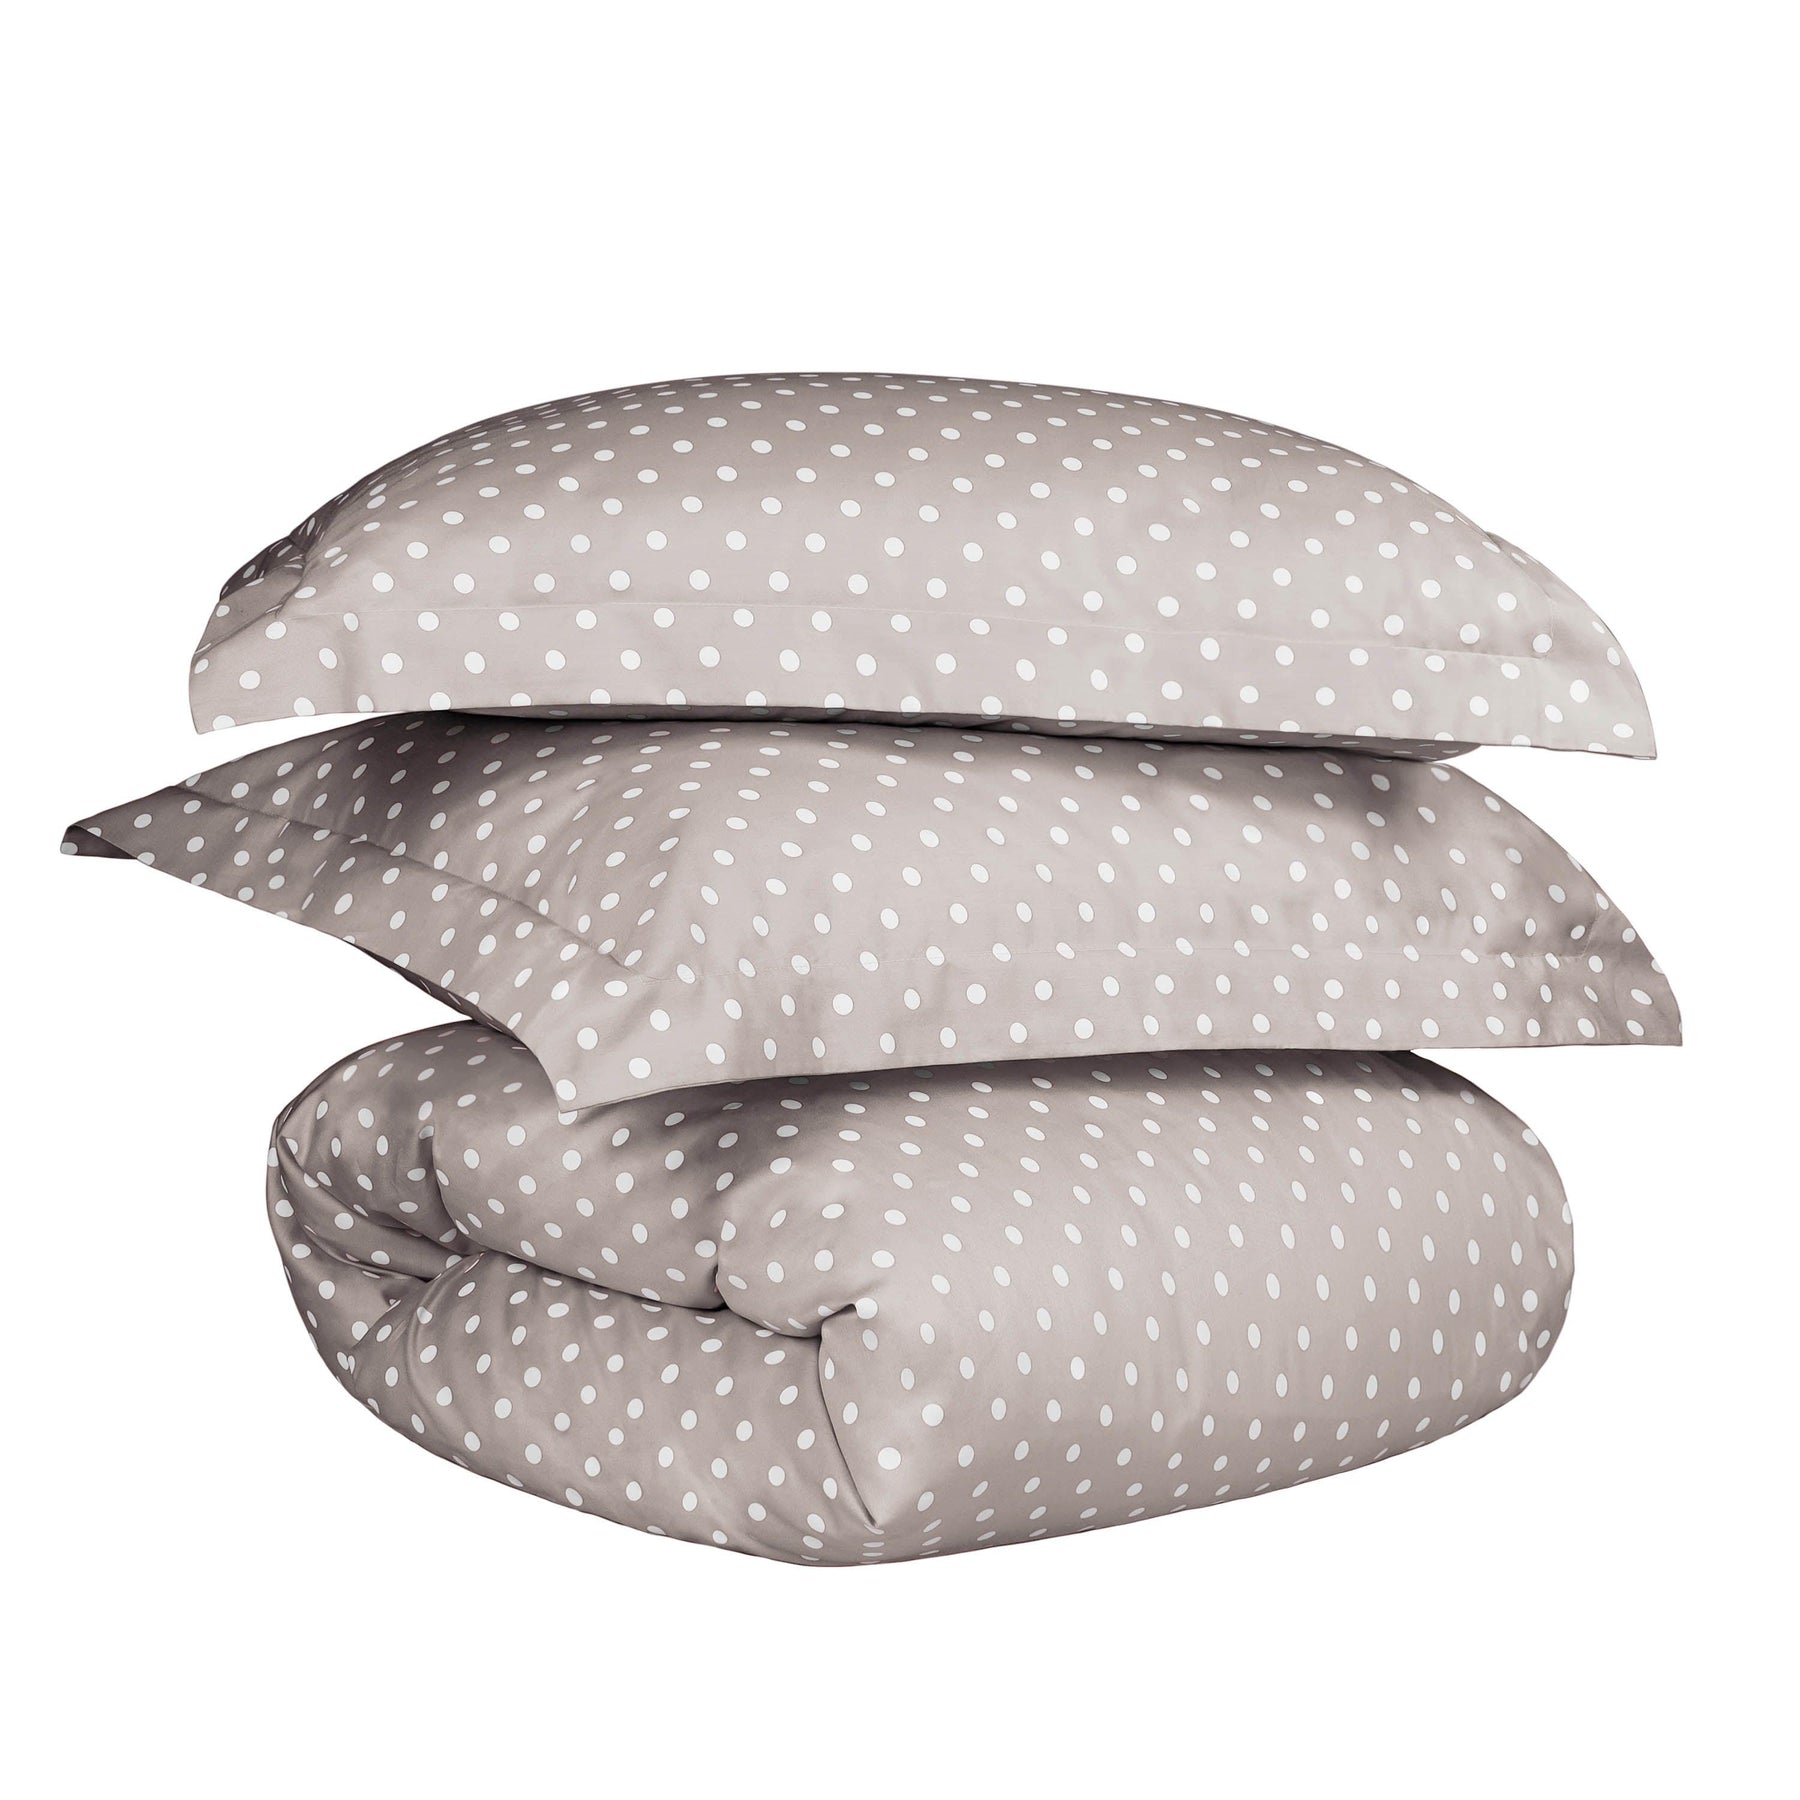 Superior Cotton Blend Polka Dot Luxury Plush Duvet Cover Set - Light Grey